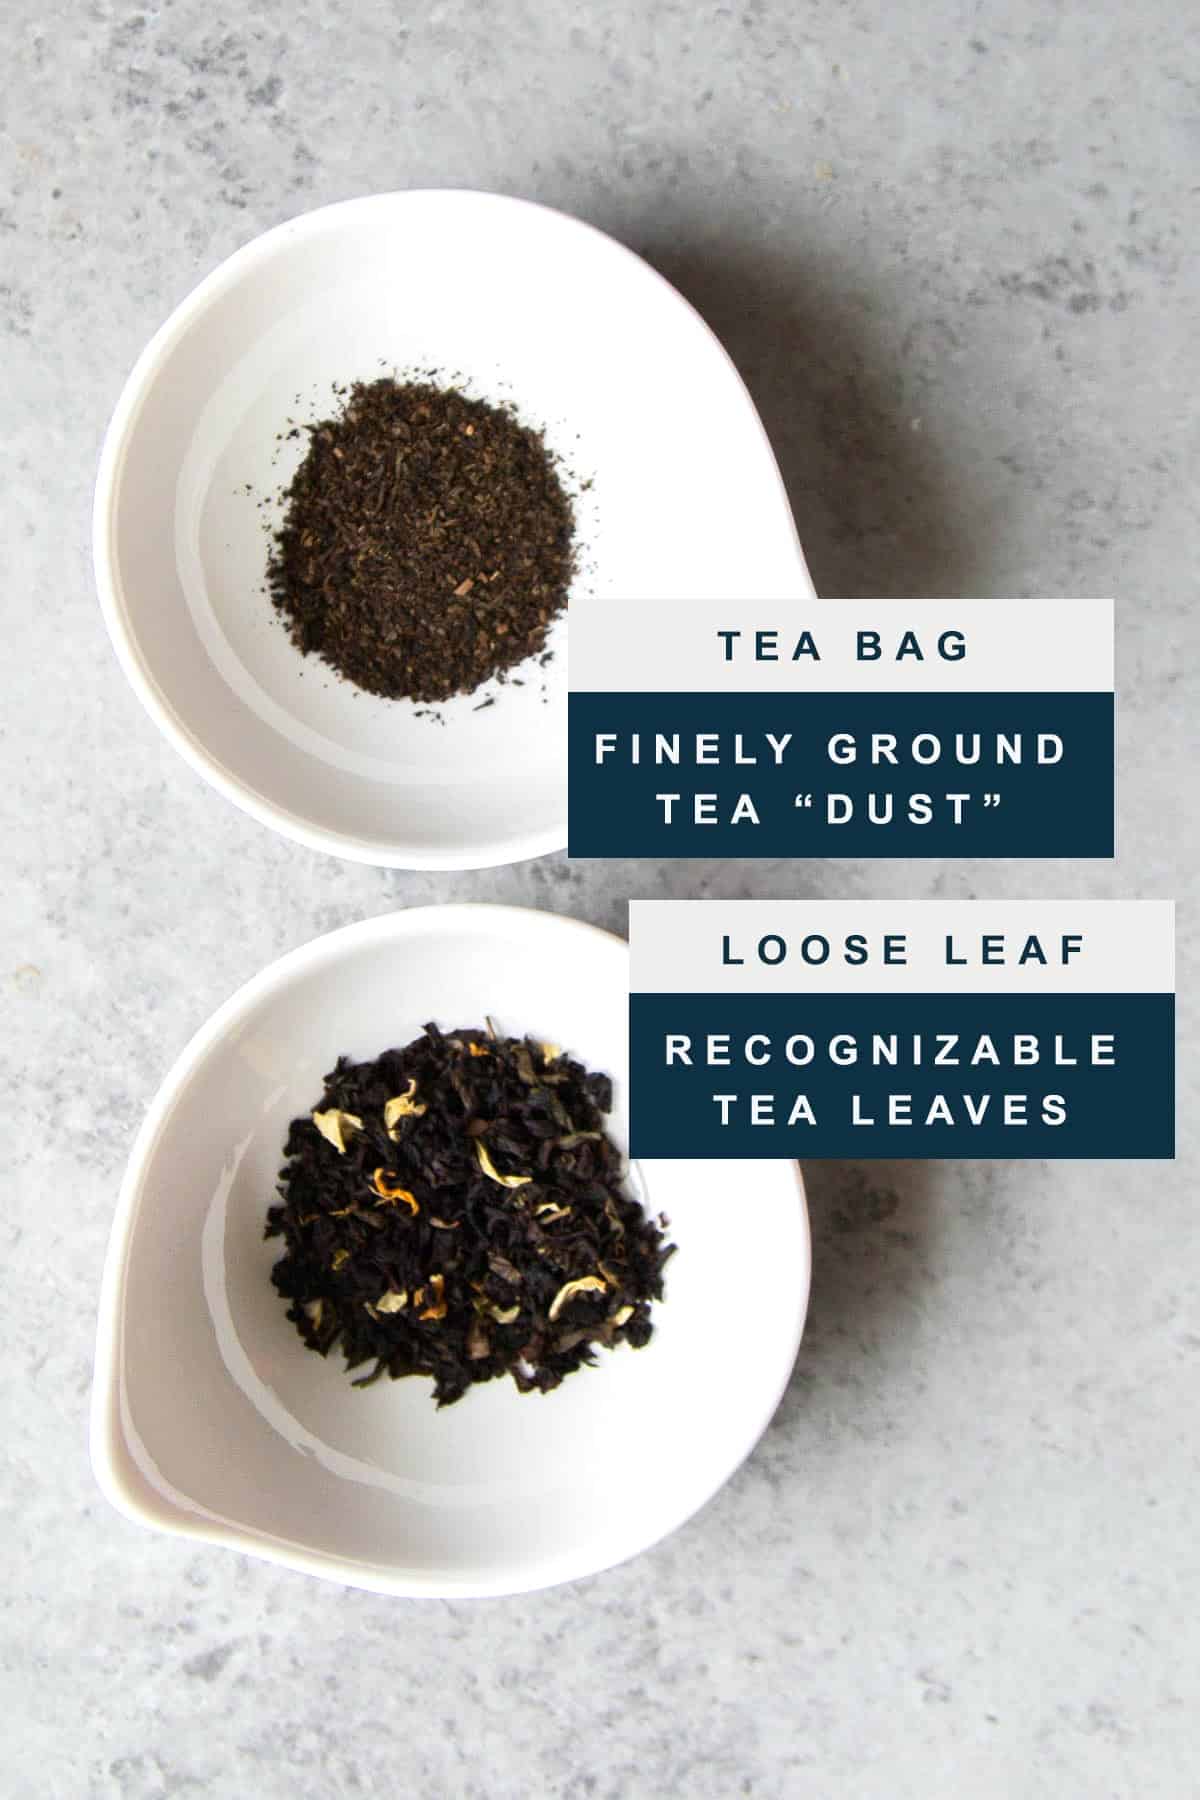 visual difference between tea bag tea dust versus loose leaf tea leaves.